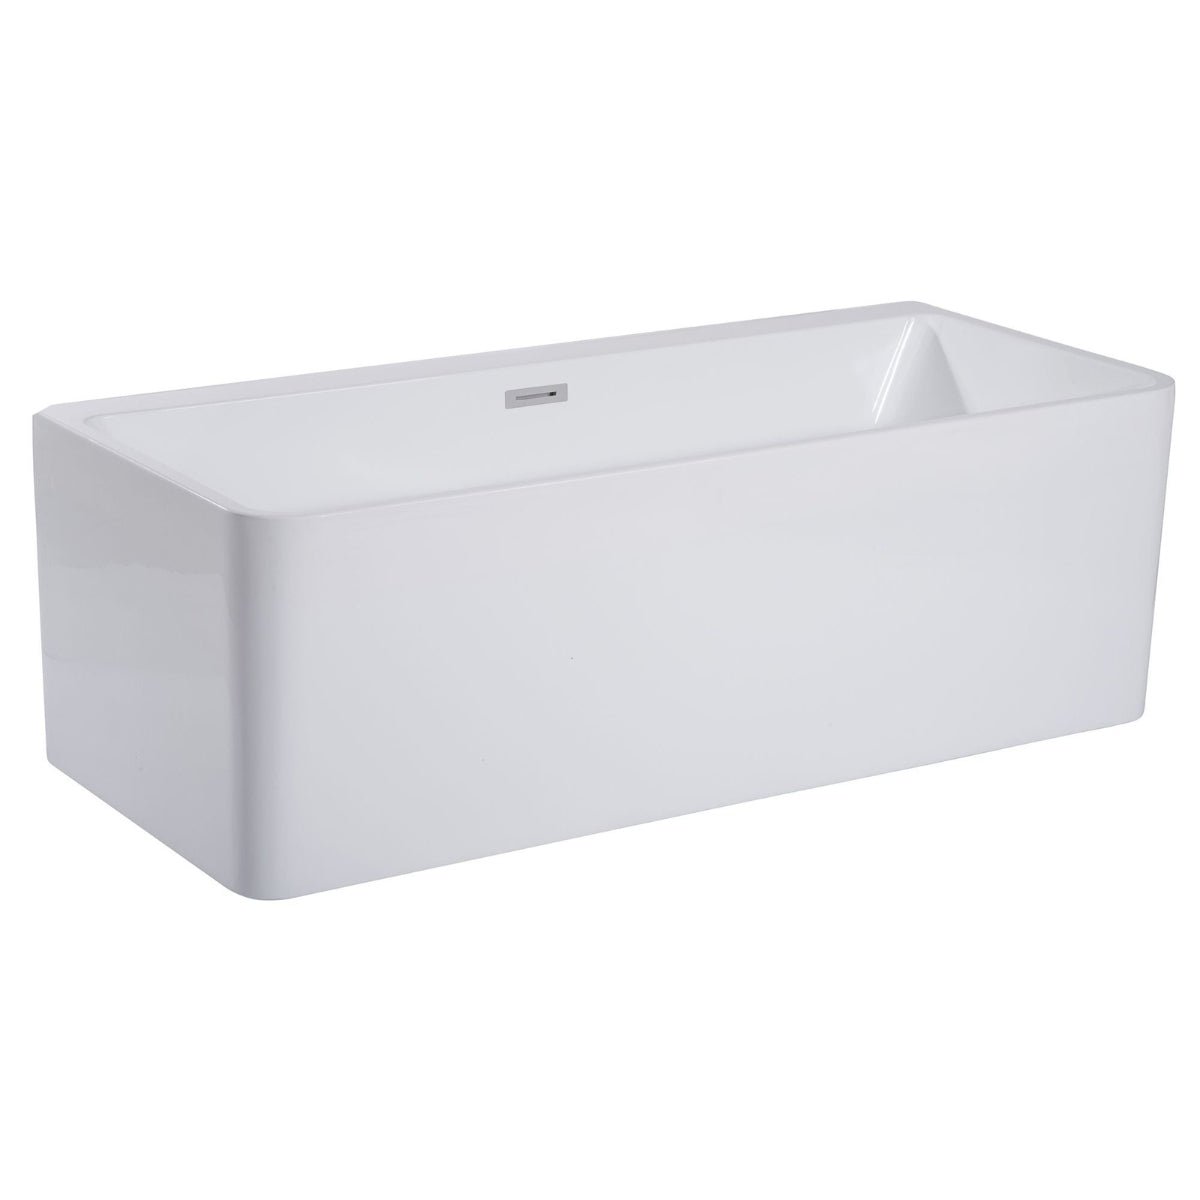 ALFI brand AB8858 59 Inch White Rectangular Acrylic Bathtub - Elite Vitality